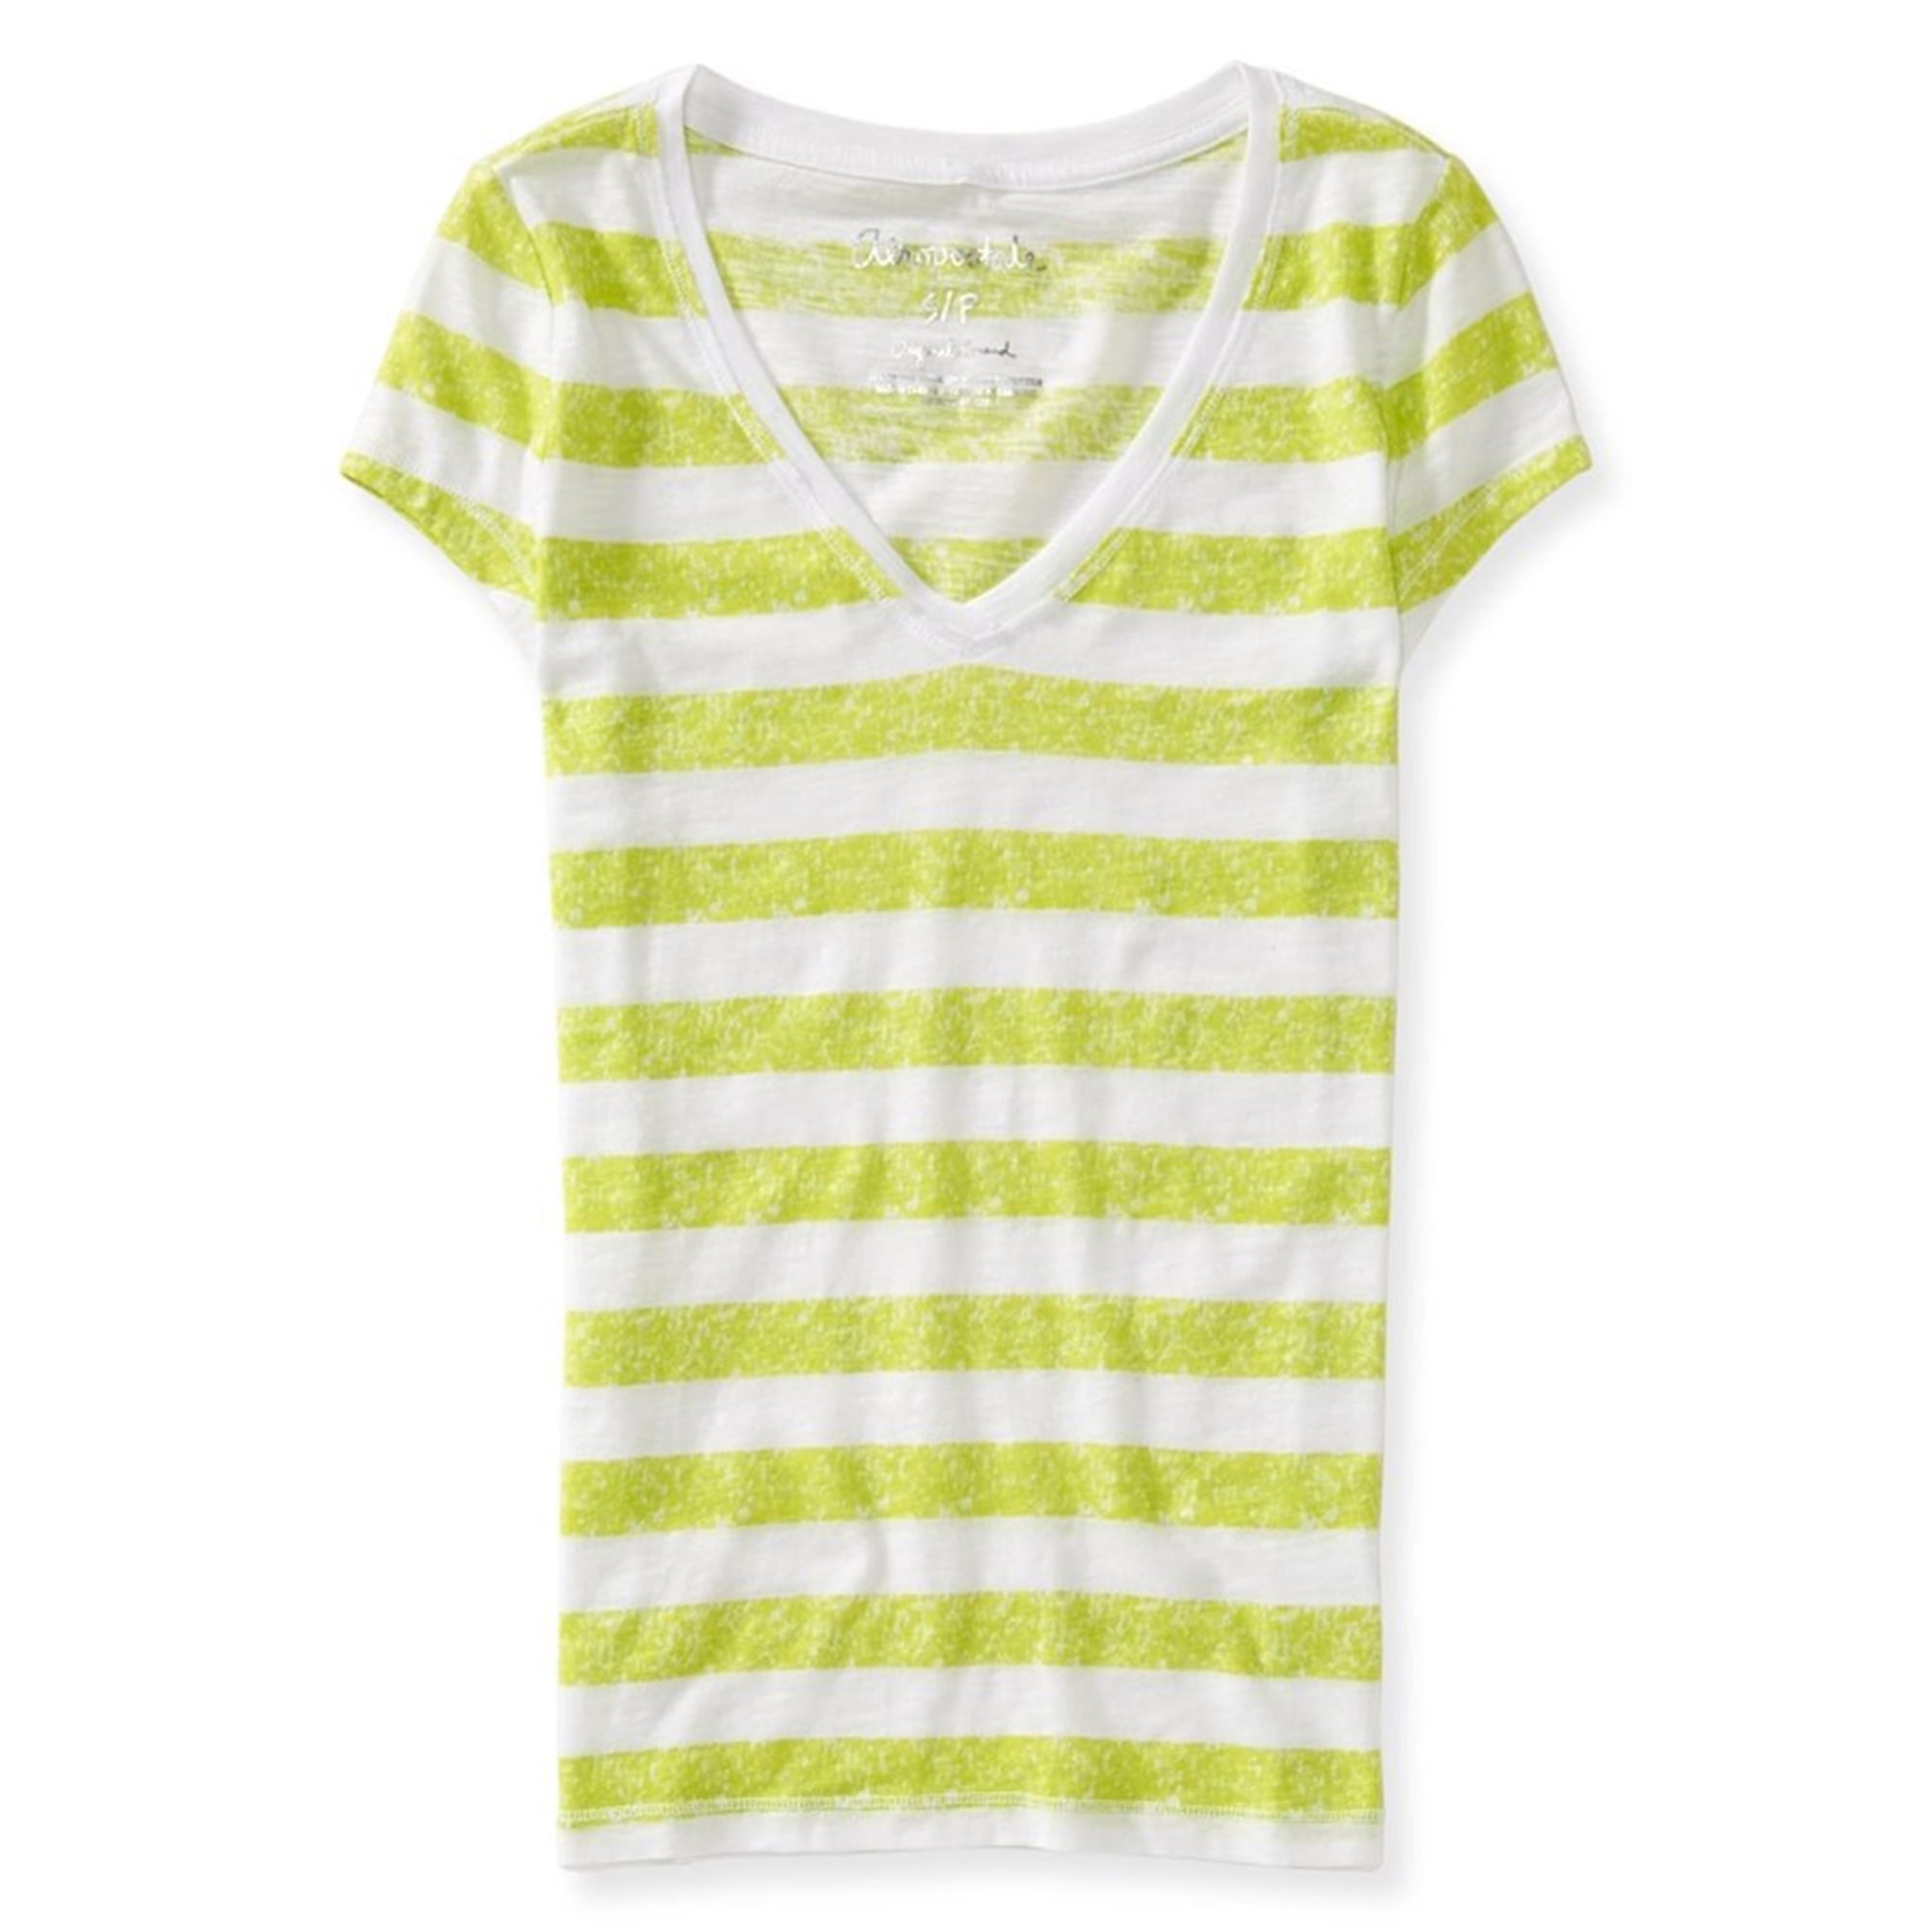 Womens AEROPOSTALE Stripe Burnout Cropped Tee T-Shirt NWT #9442